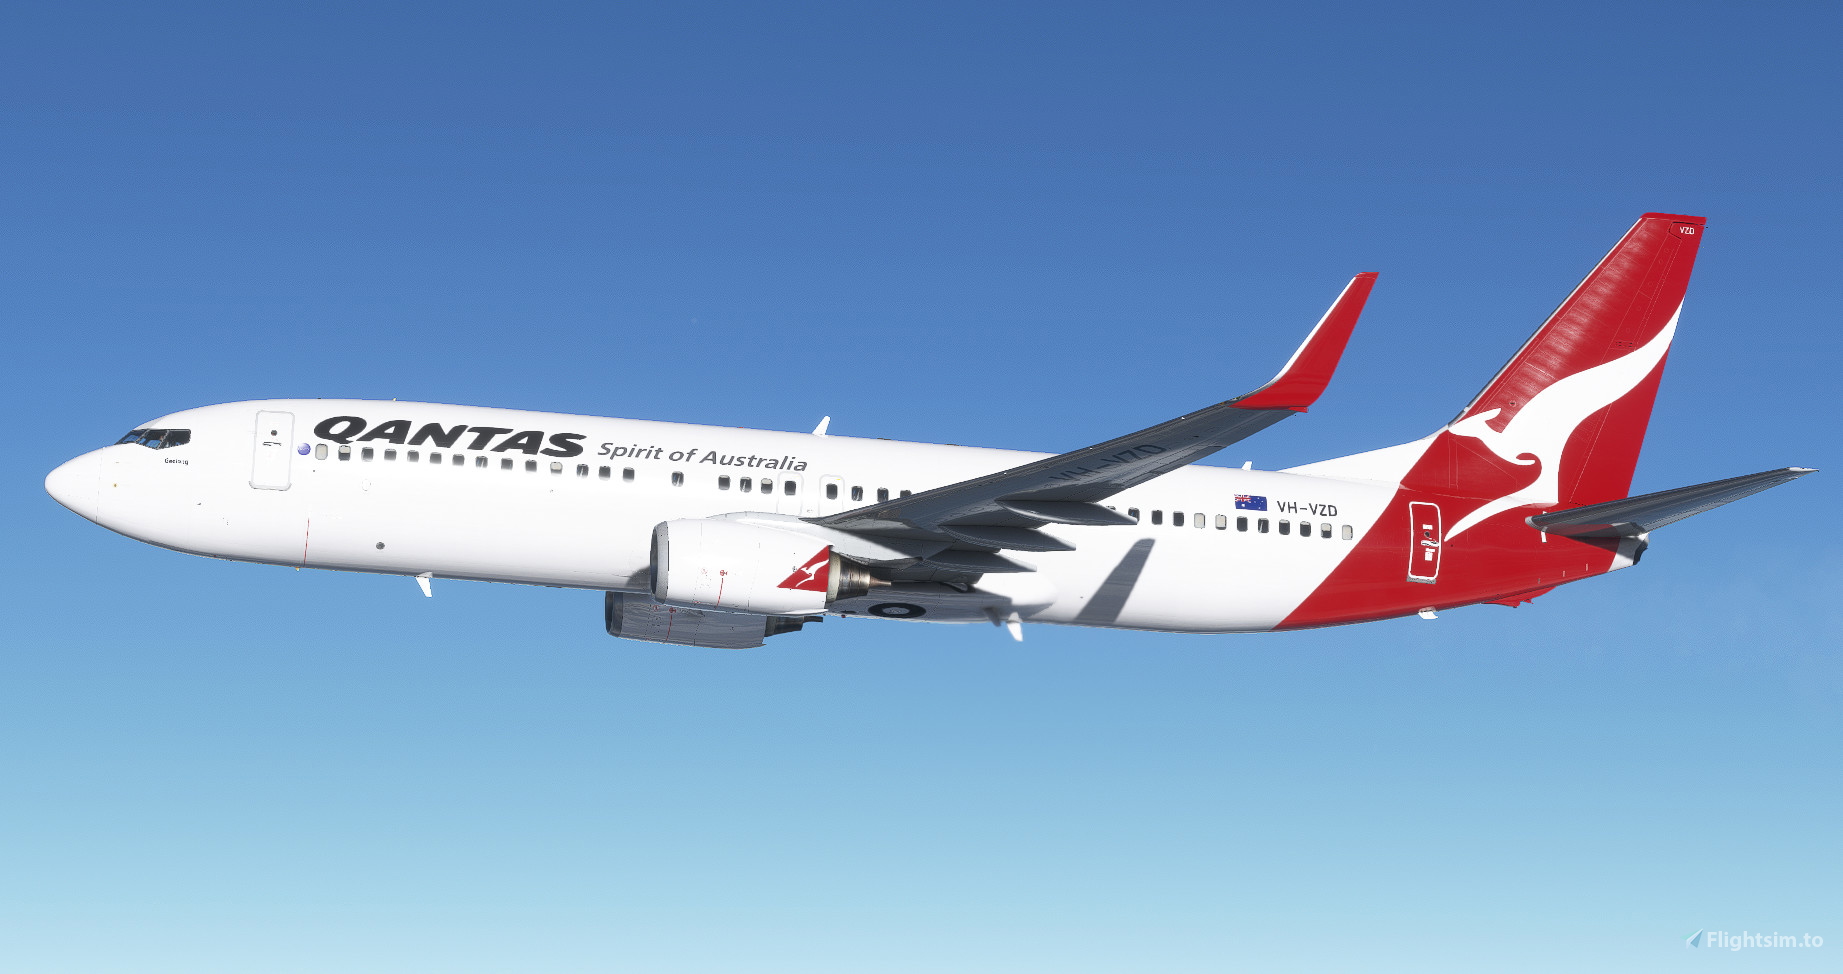 Qantas VH-VZD 'Geelong' (New Roo)| PMDG 737-800 [4K] for Microsoft 